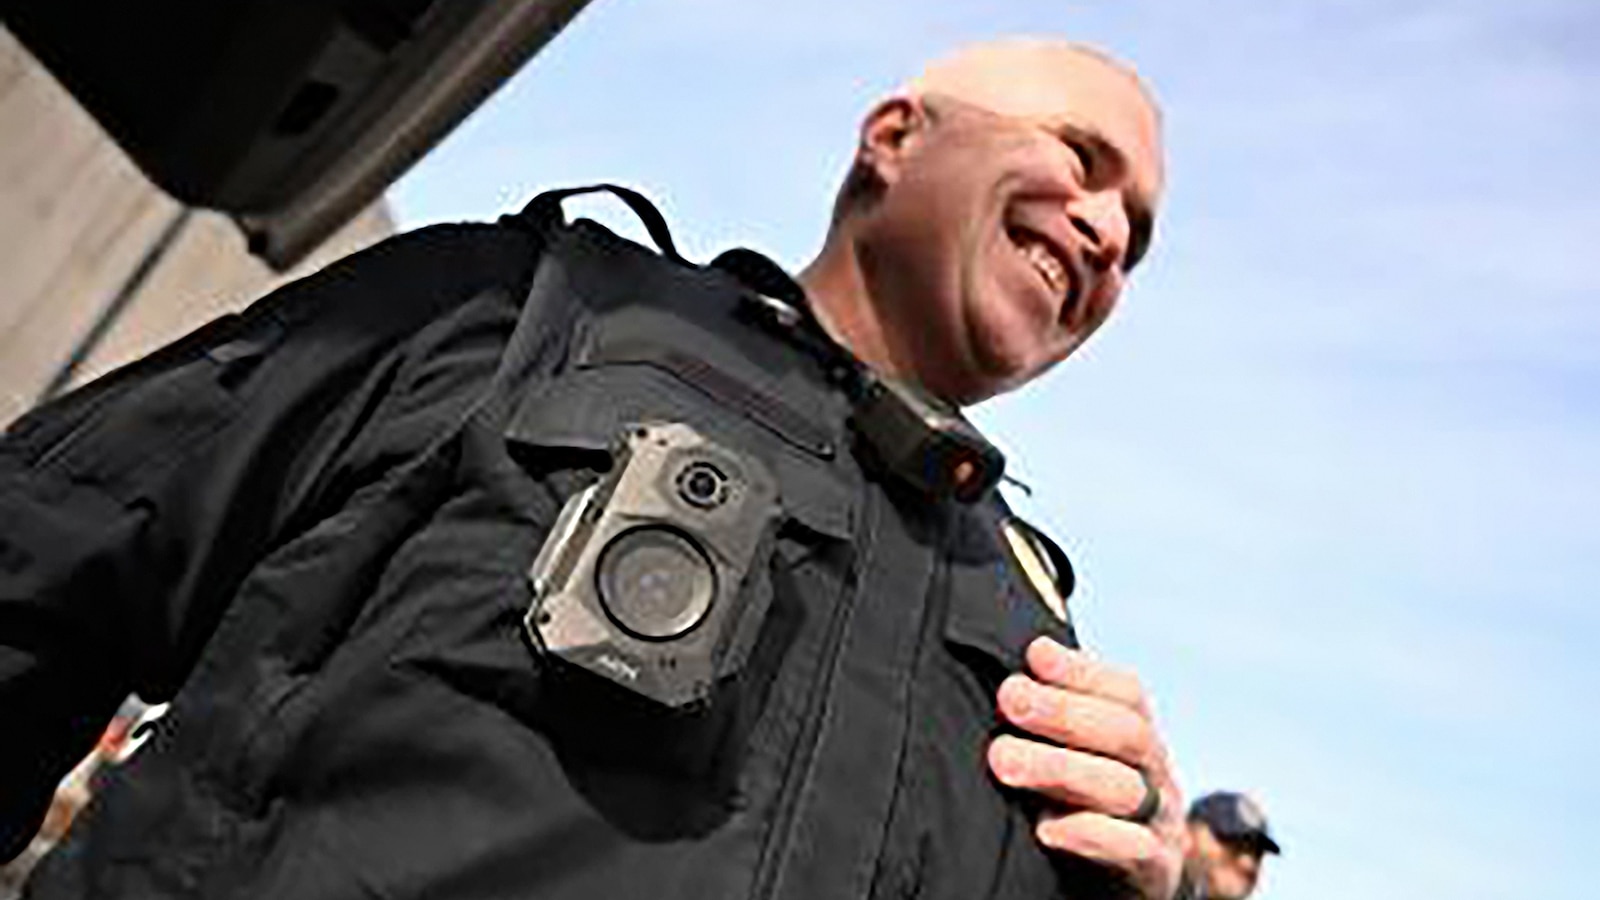 Capitol Police wearing body cameras in pilot program to build public trust